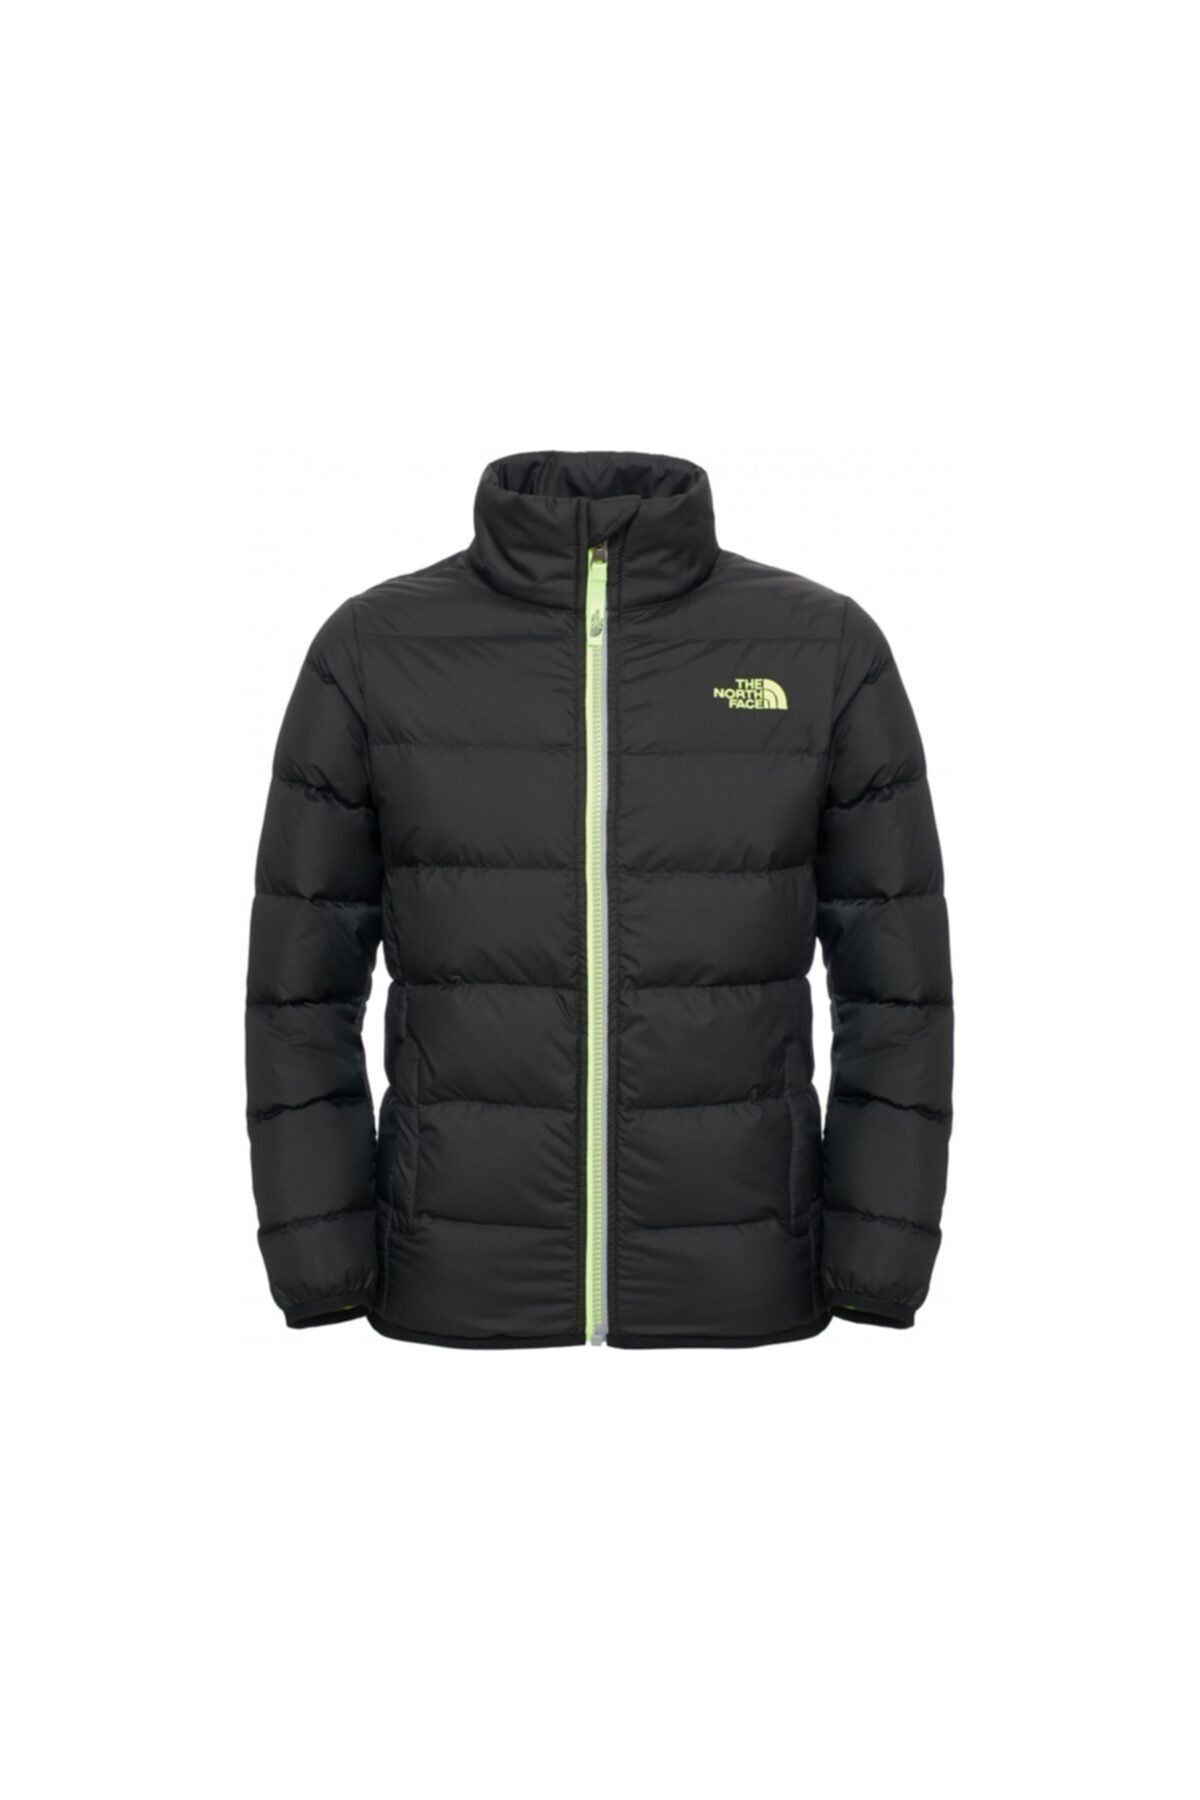 The North Face Çocuk Ceketi Siyah B Andes Jacket T0chq6ags